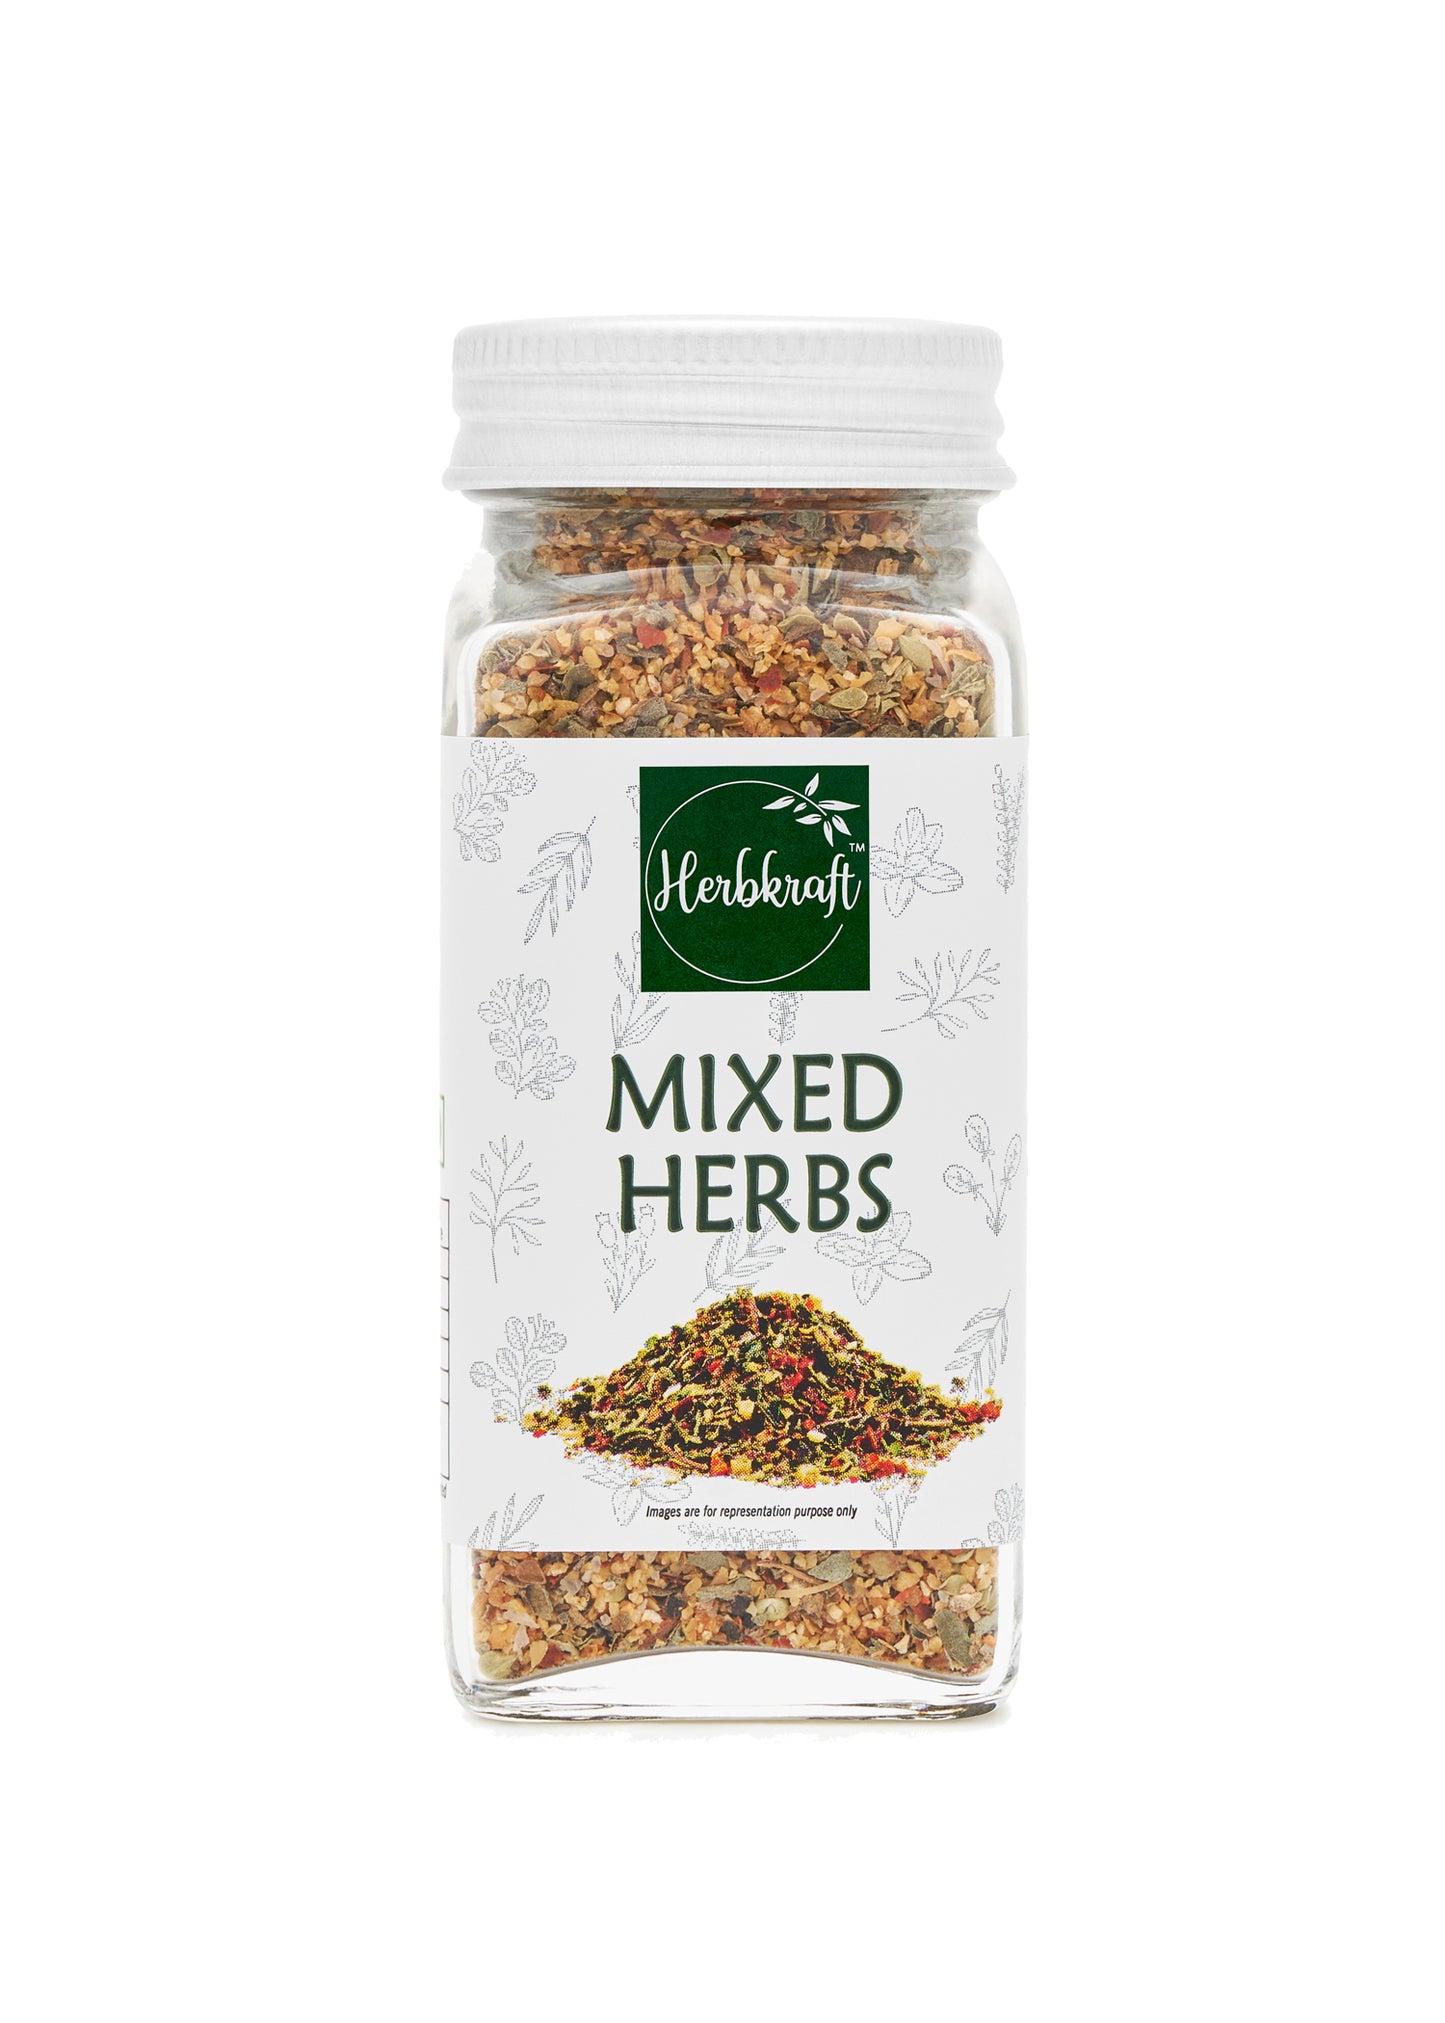 Herbkraft Mixed Herbs